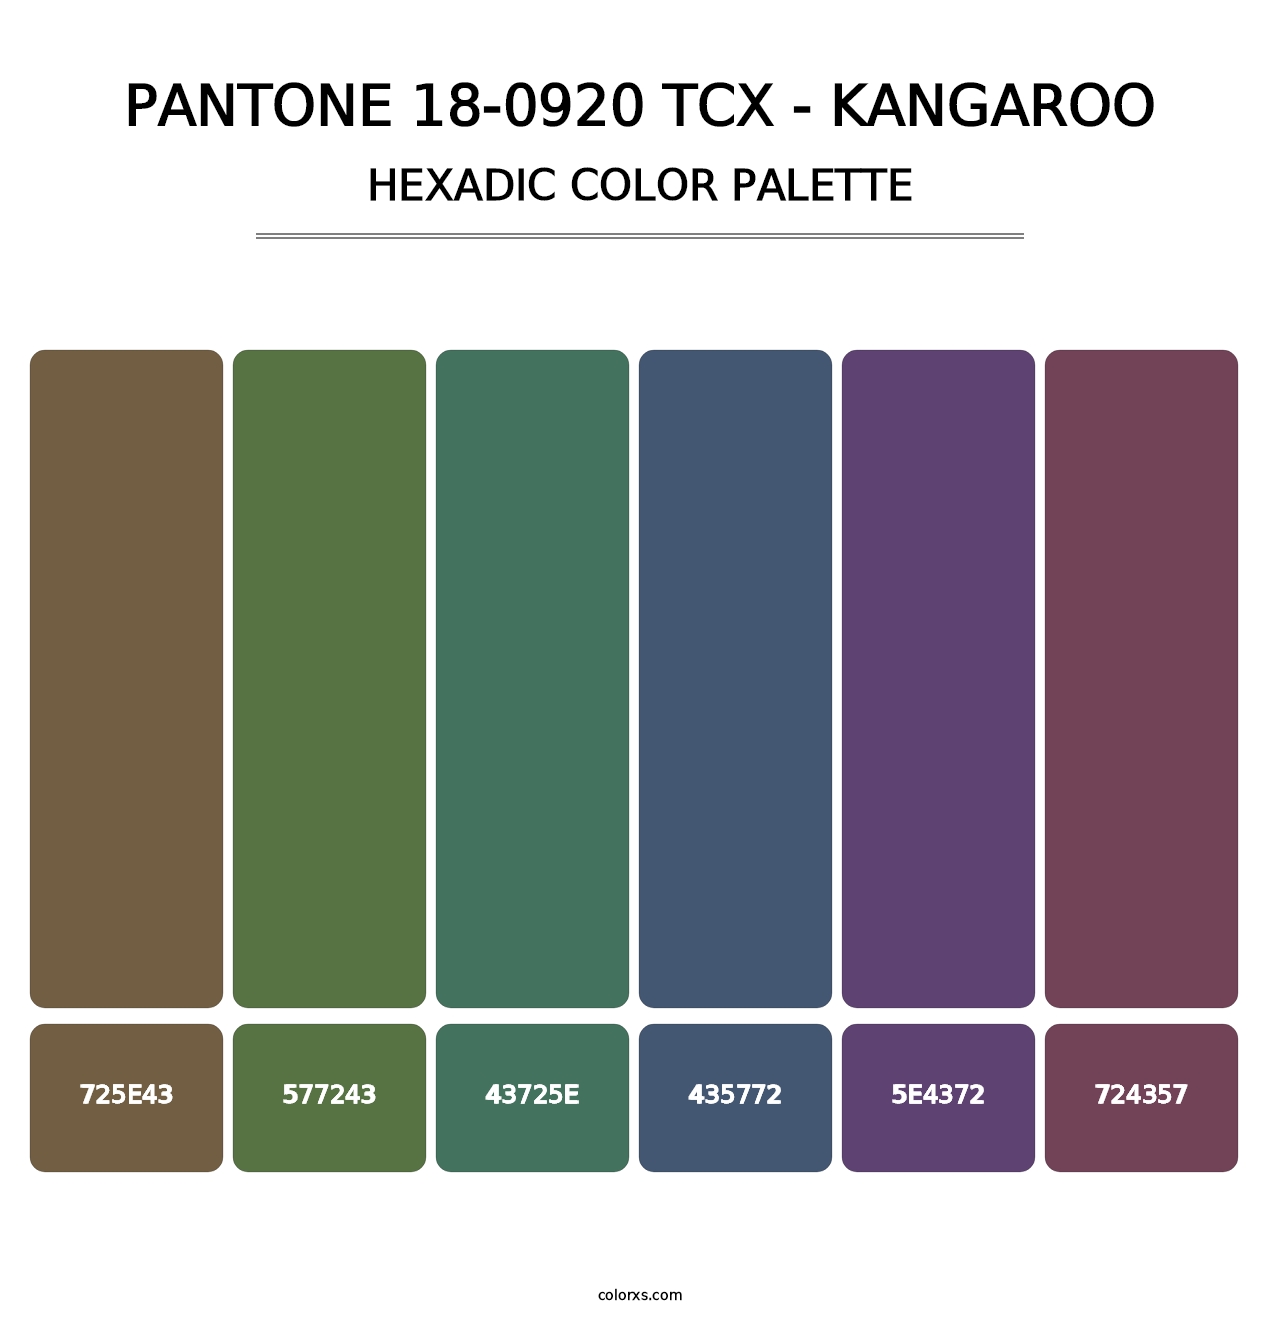 PANTONE 18-0920 TCX - Kangaroo - Hexadic Color Palette